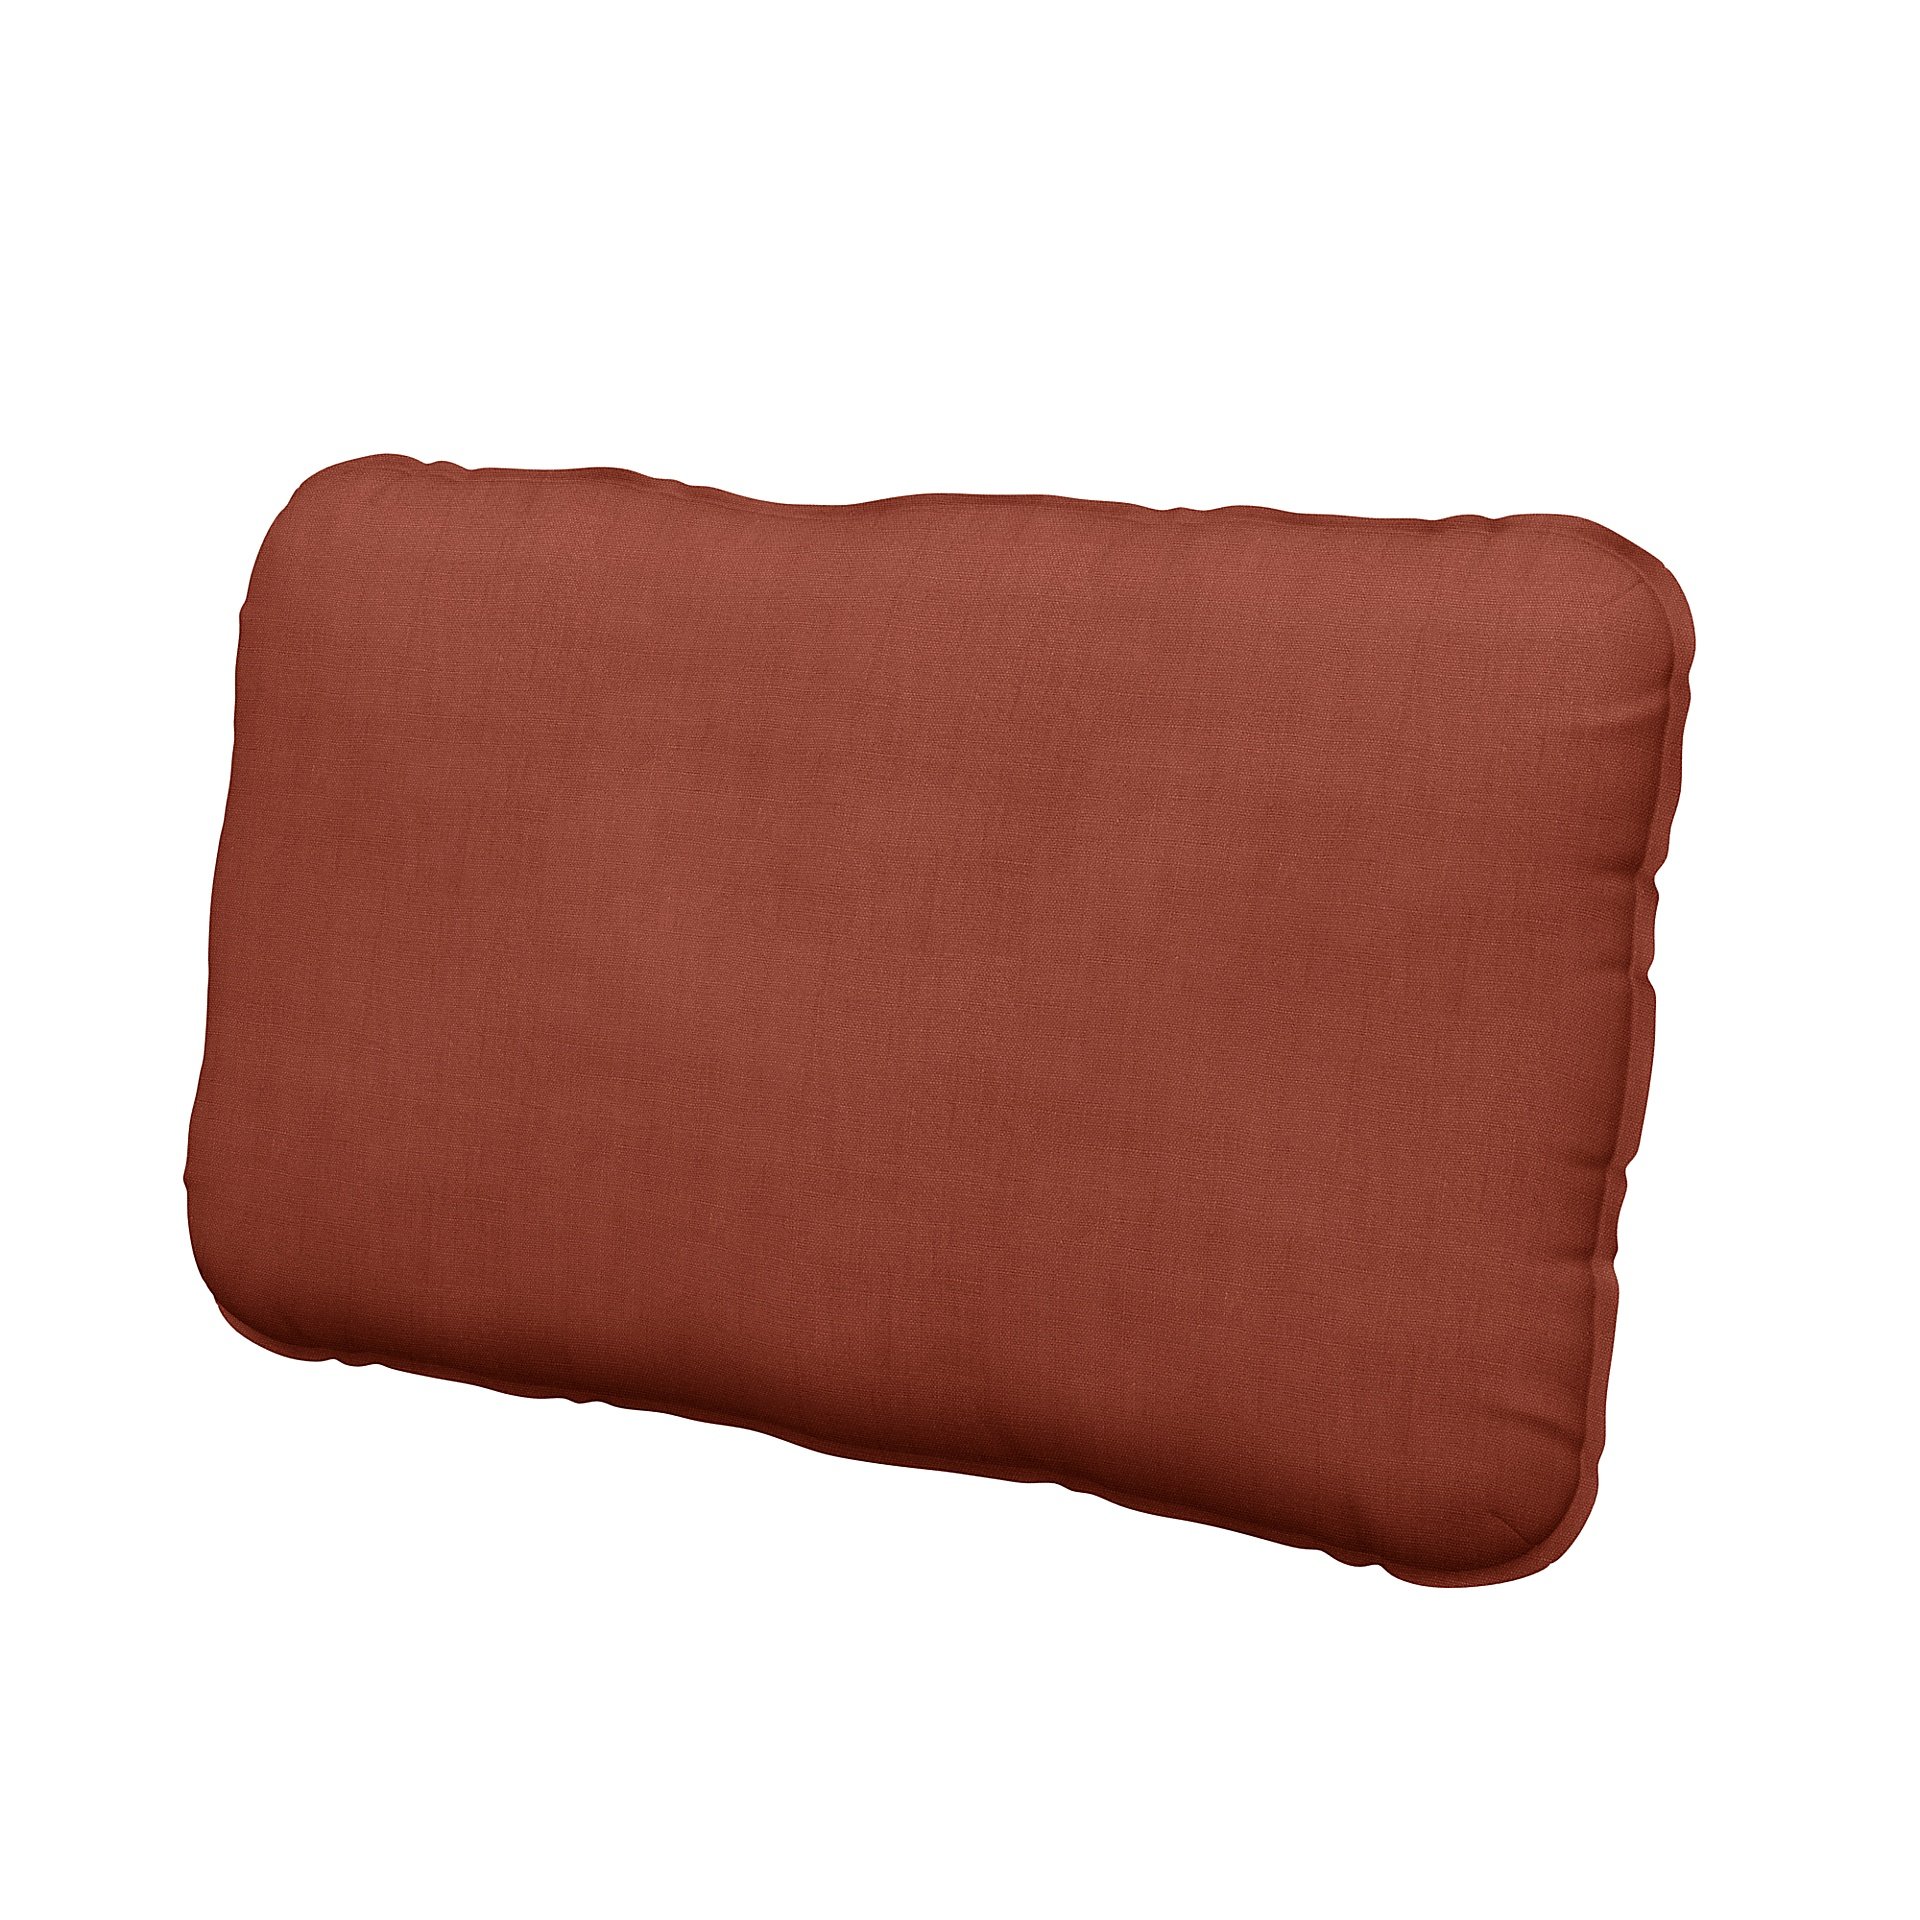 IKEA - Vallentuna back cushion cover 40x75cm, Terracotta, Linen - Bemz